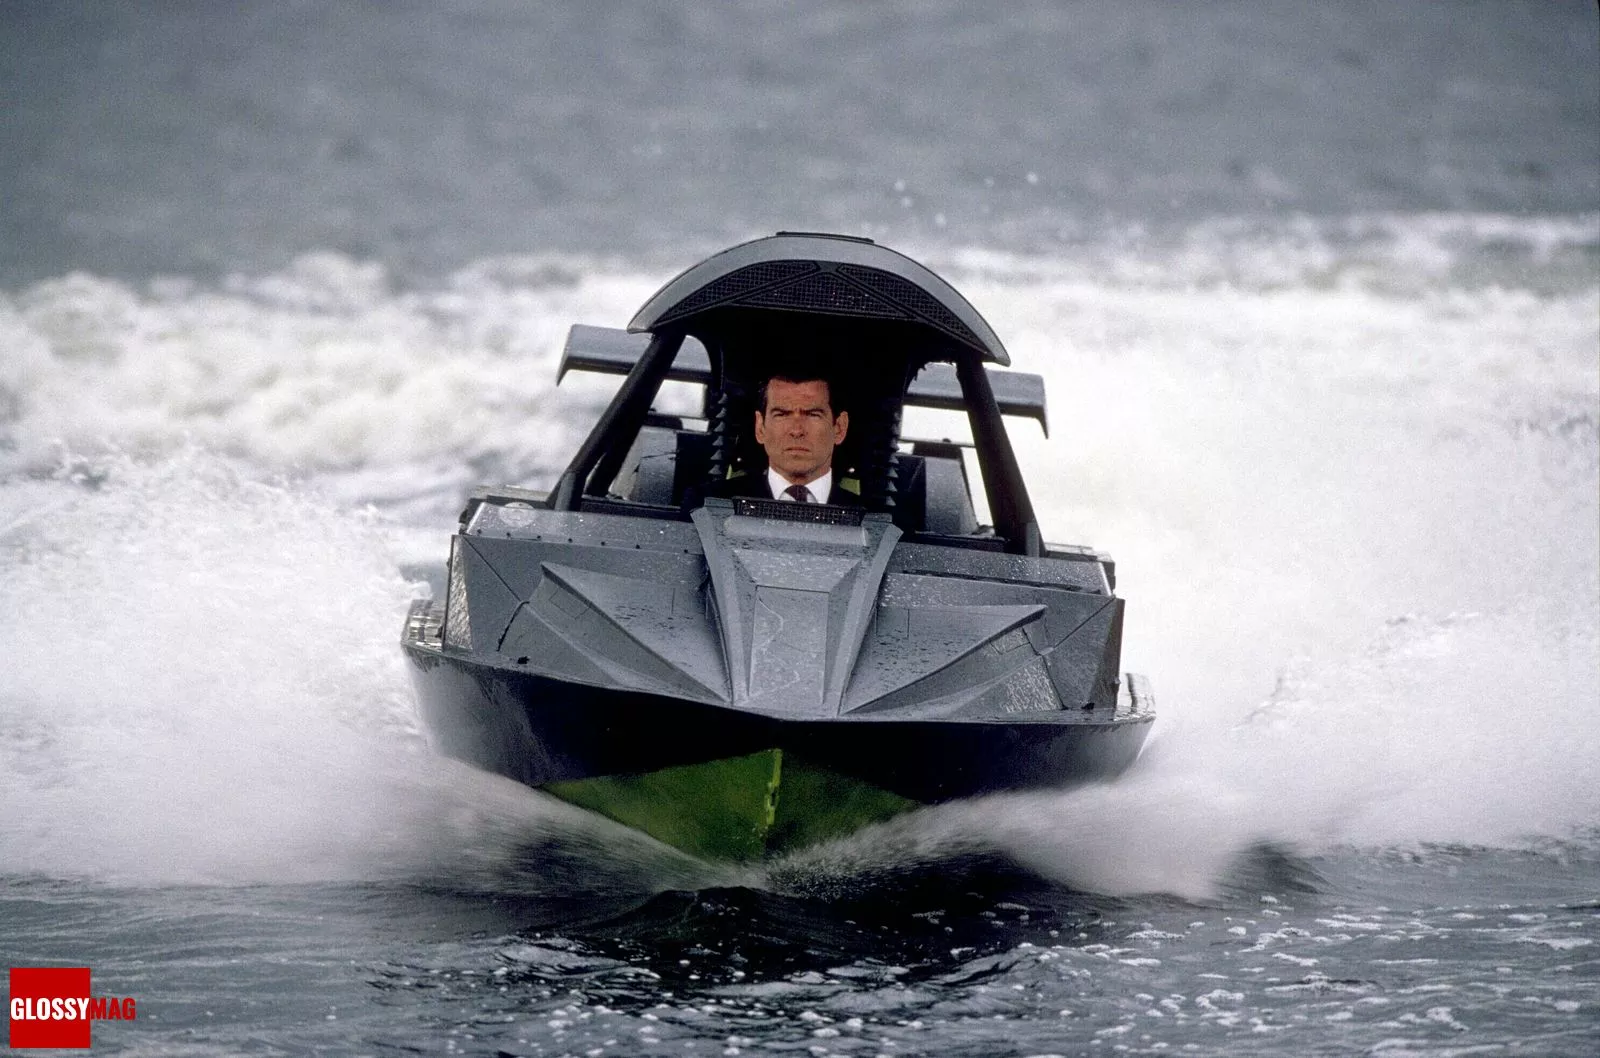 Реактивная лодка Q Jet Boat из фильма о Джеймсе Бонде «И целого мира мало», фото 2